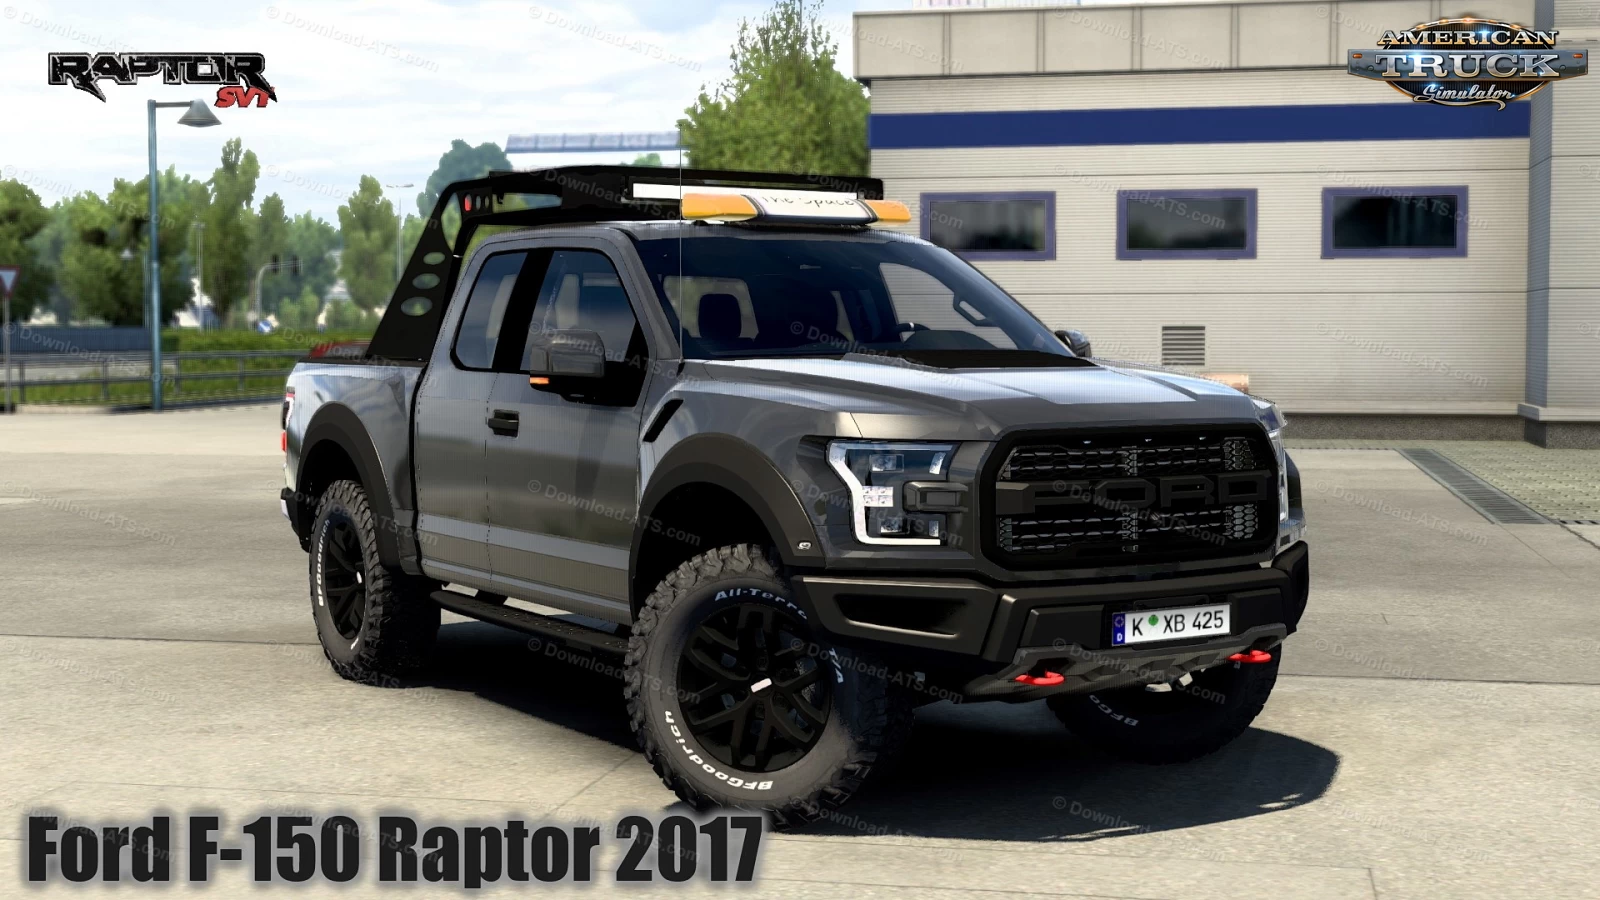 Ford F-150 Raptor 2017 + Interior v1.8 (1.43.x) for ATS